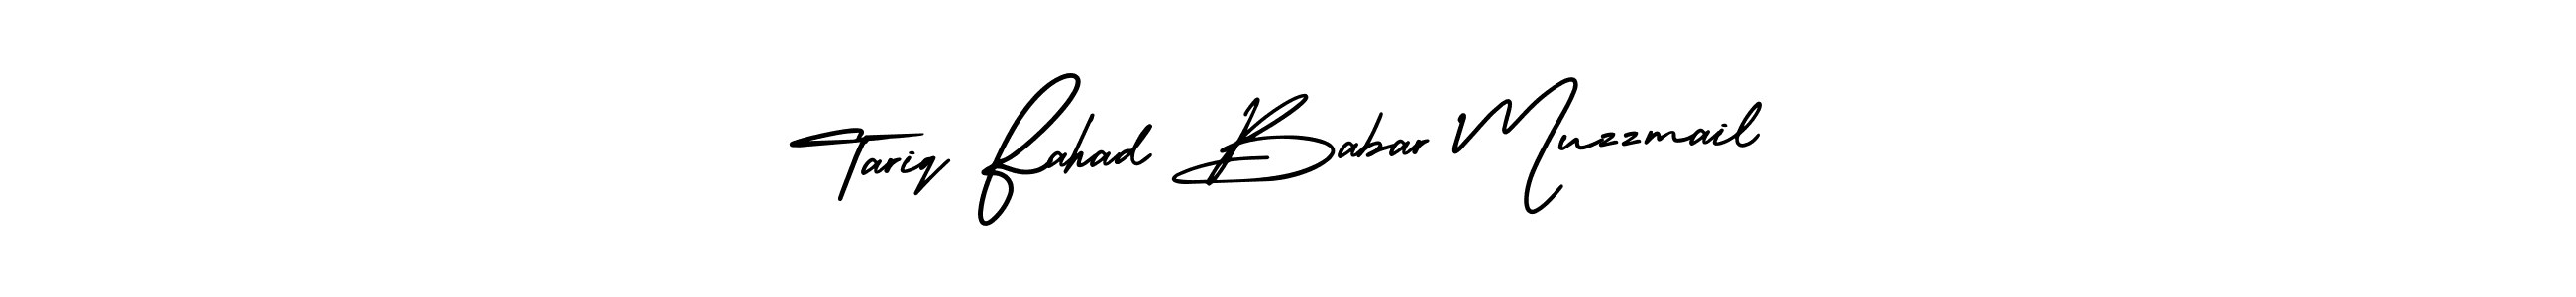 Tariq Fahad Babar Muzzmail stylish signature style. Best Handwritten Sign (AmerikaSignatureDemo-Regular) for my name. Handwritten Signature Collection Ideas for my name Tariq Fahad Babar Muzzmail. Tariq Fahad Babar Muzzmail signature style 3 images and pictures png